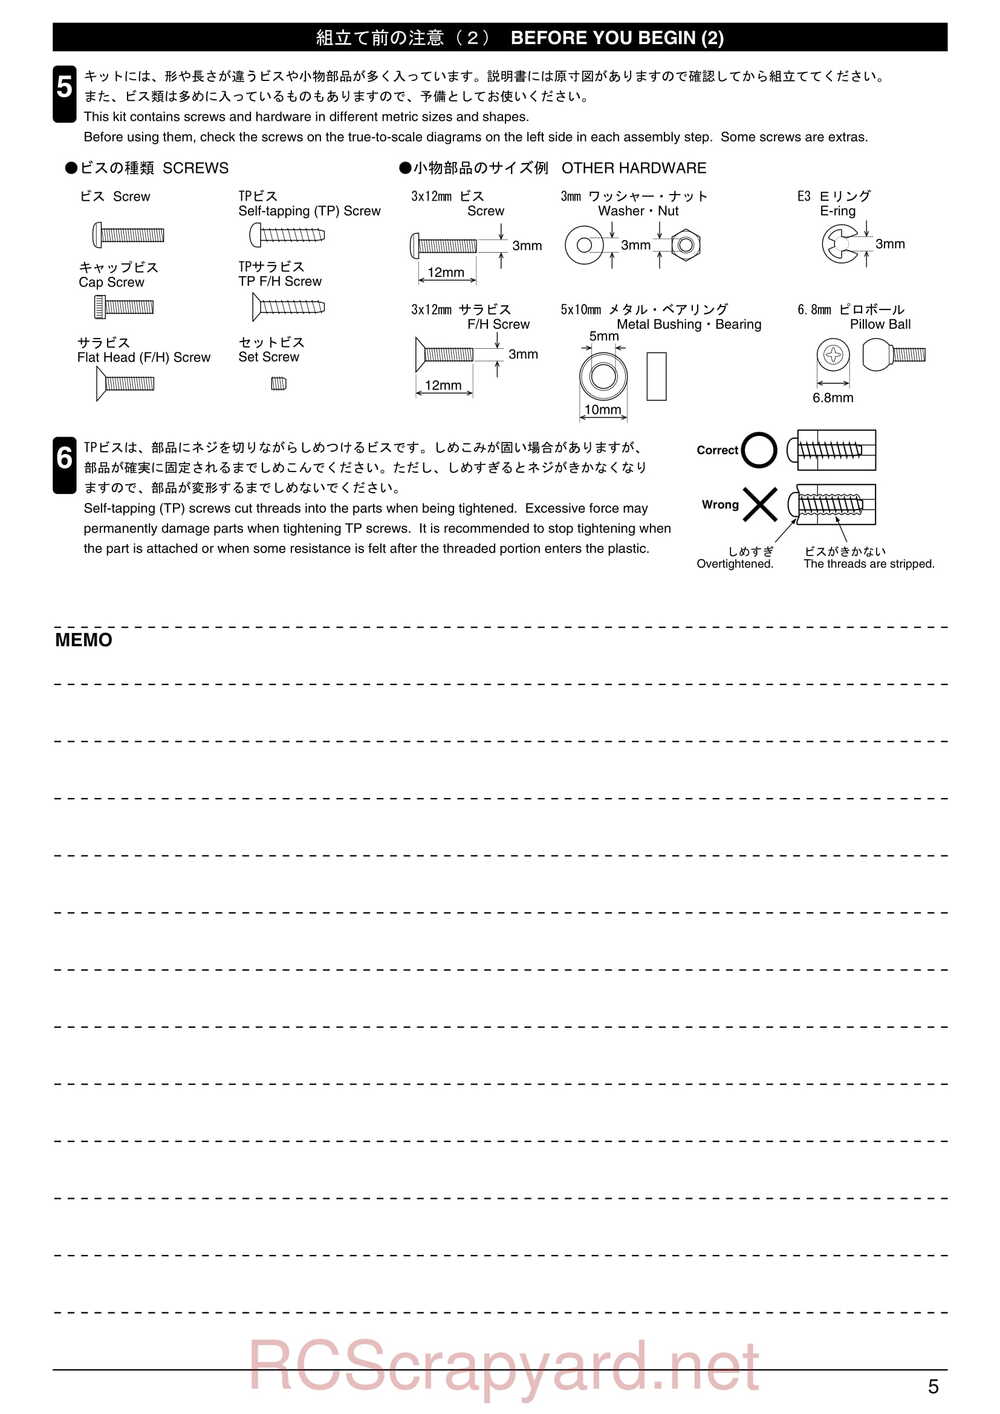 Kyosho - 31192 - Inferno-MP-7-5 Sports - Manual - Page 05